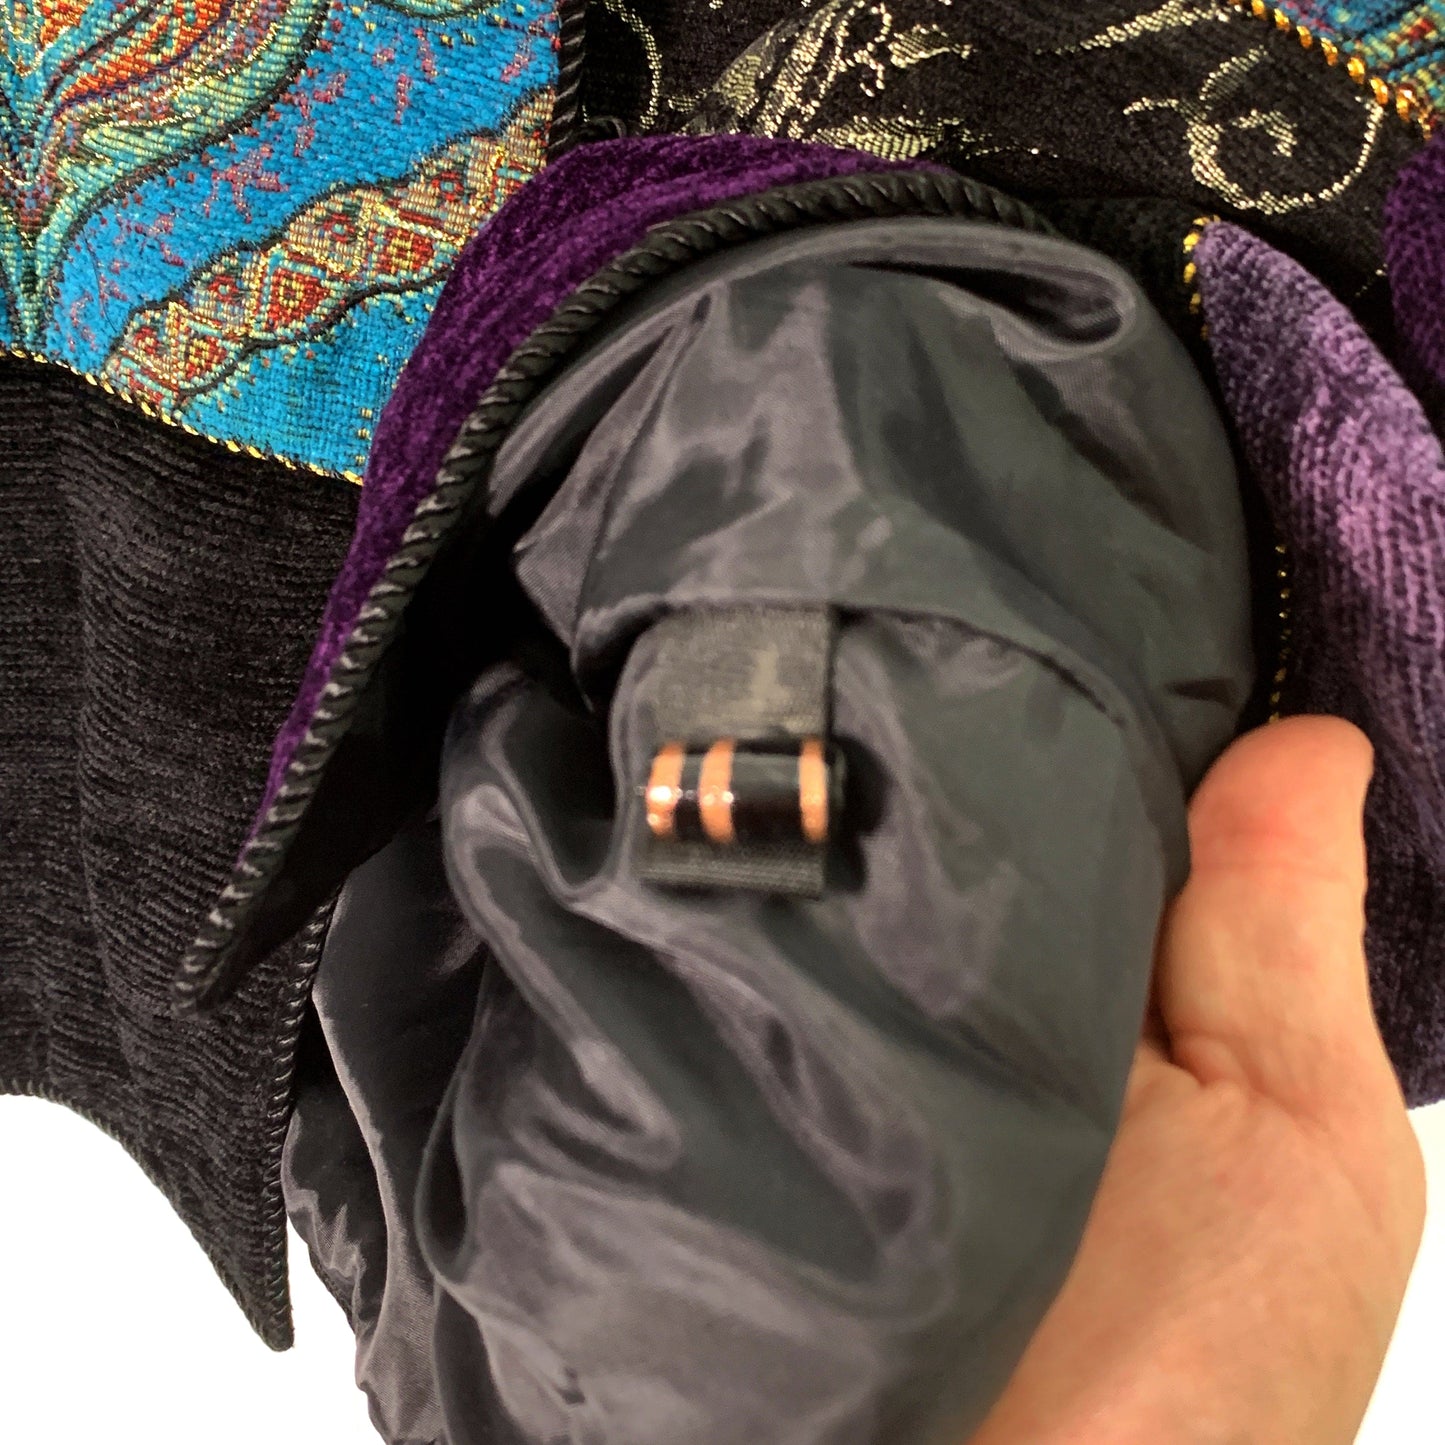 Delightful Indigo Moon Womens Embroidered & Embellished Button-Up Jacket Size Large Black/Purple